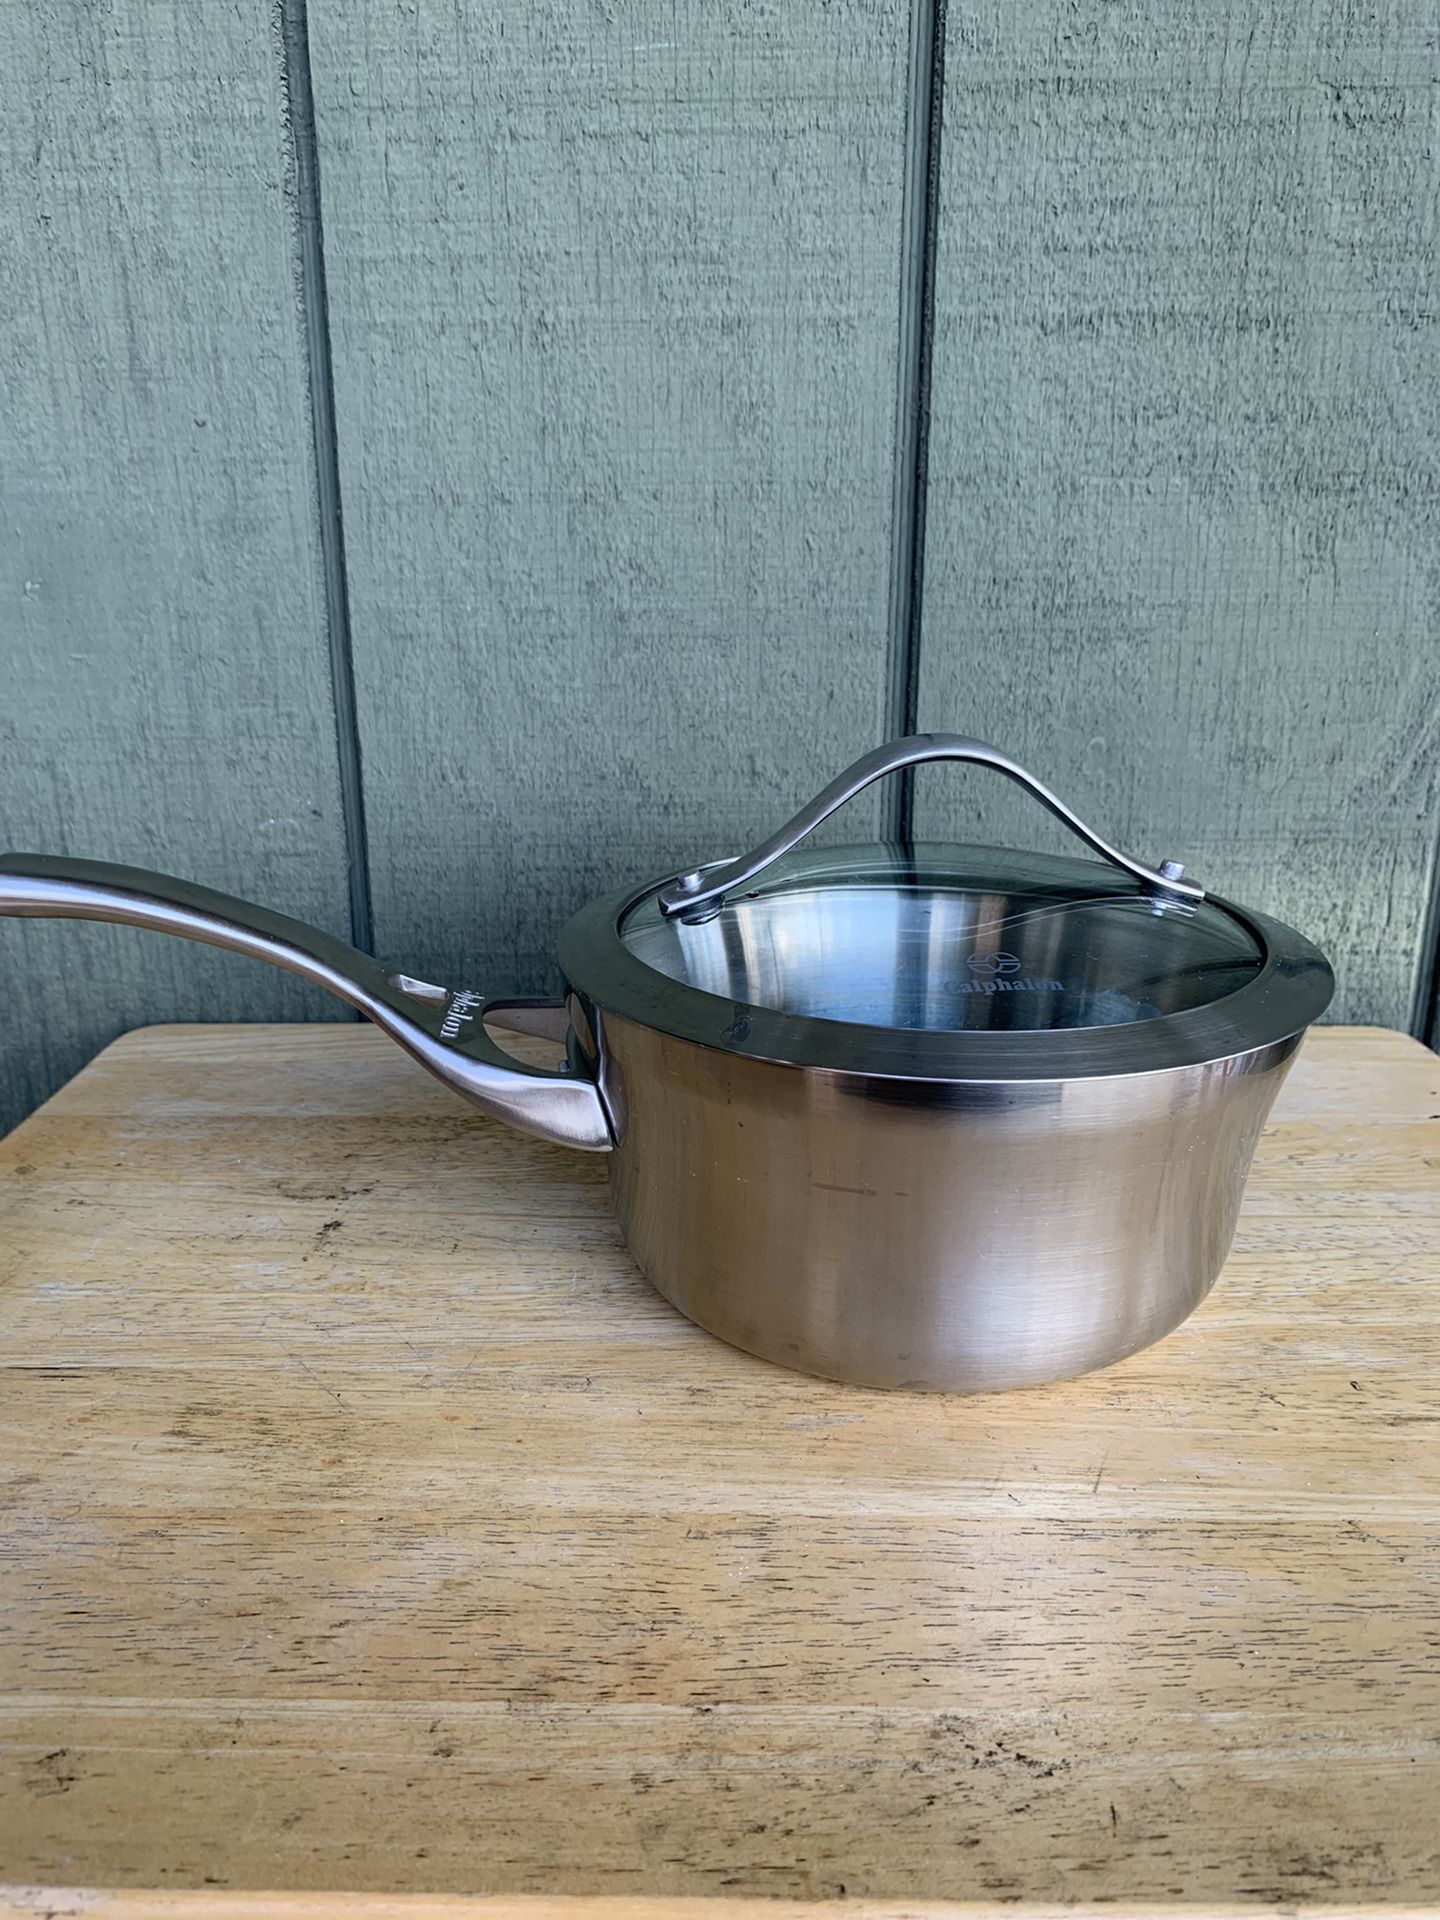 Calphalon Nonstick 10-inch Pan for Sale in Alexandria, VA - OfferUp